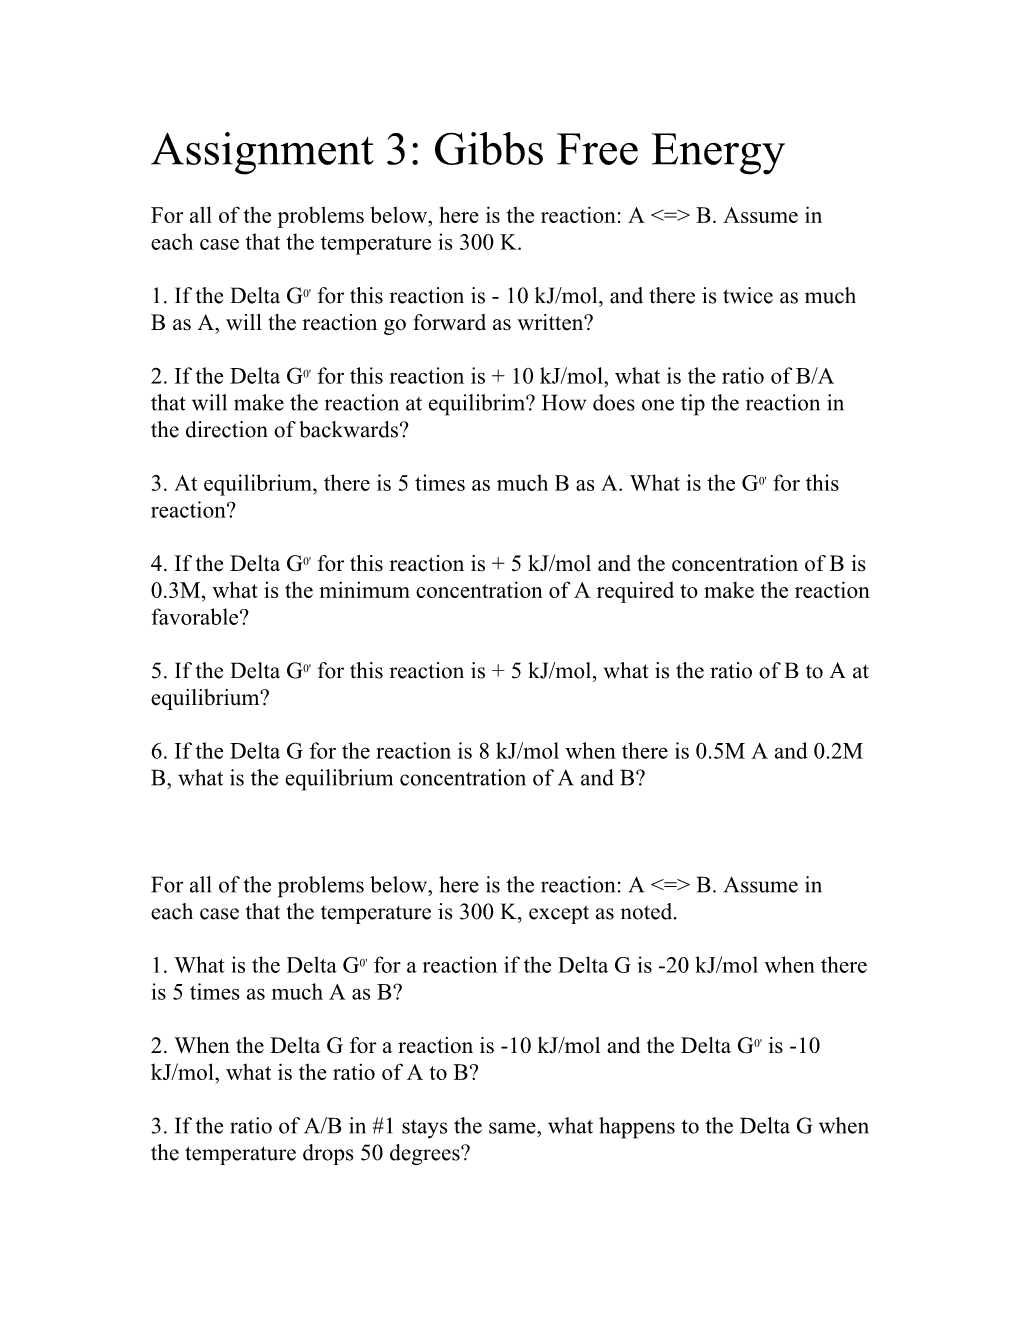 Assignment 3: Gibbs Free Energy